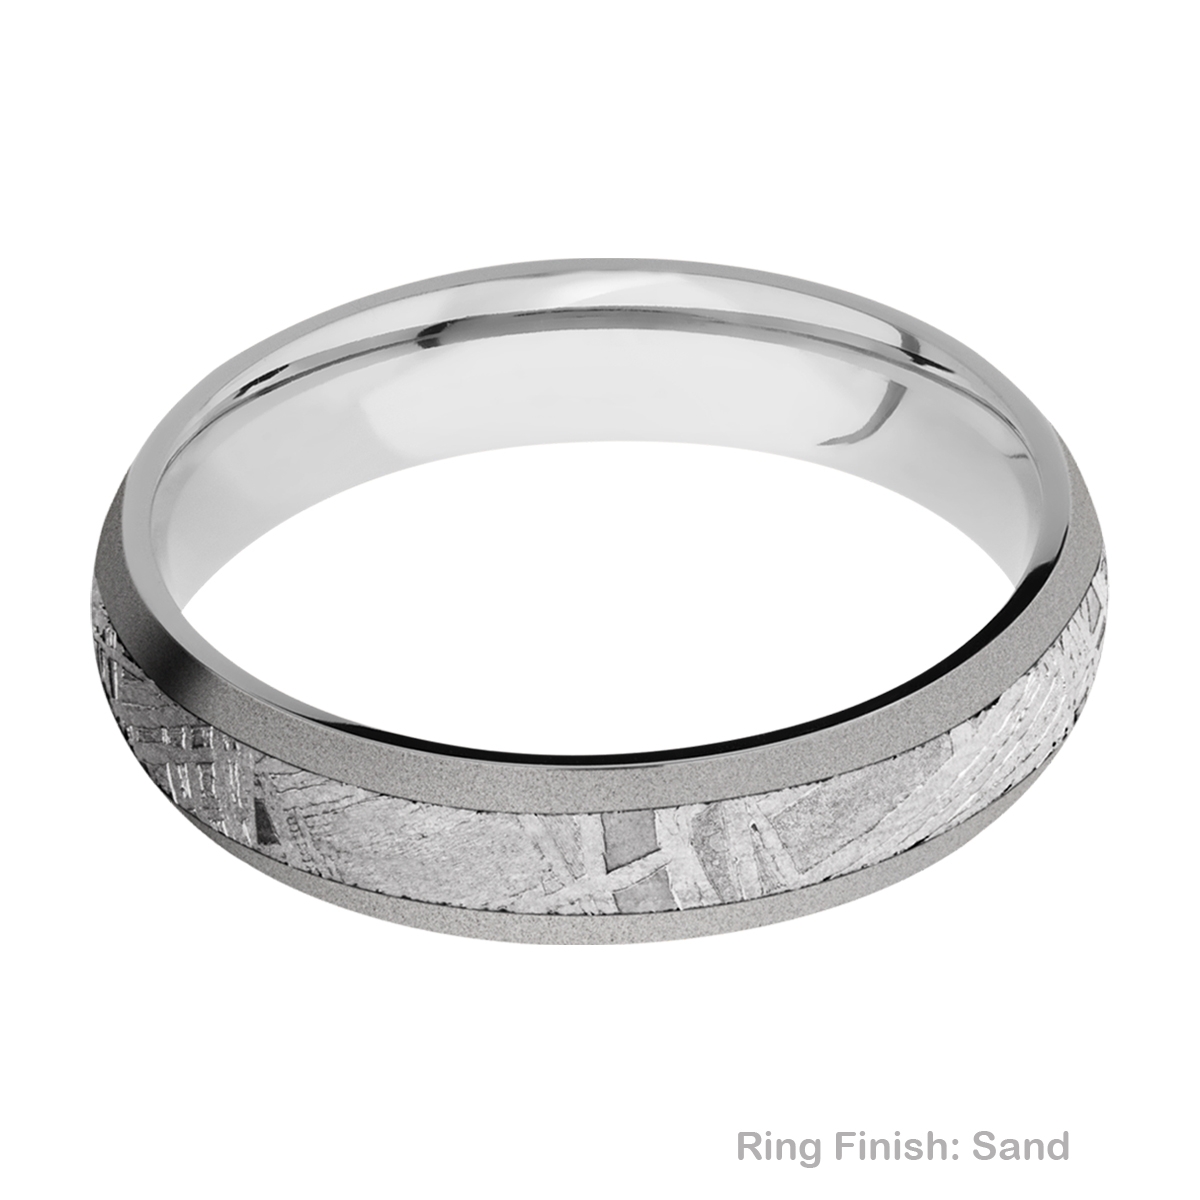 Lashbrook CC5D13/METEORITE Cobalt Chrome Wedding Ring or Band